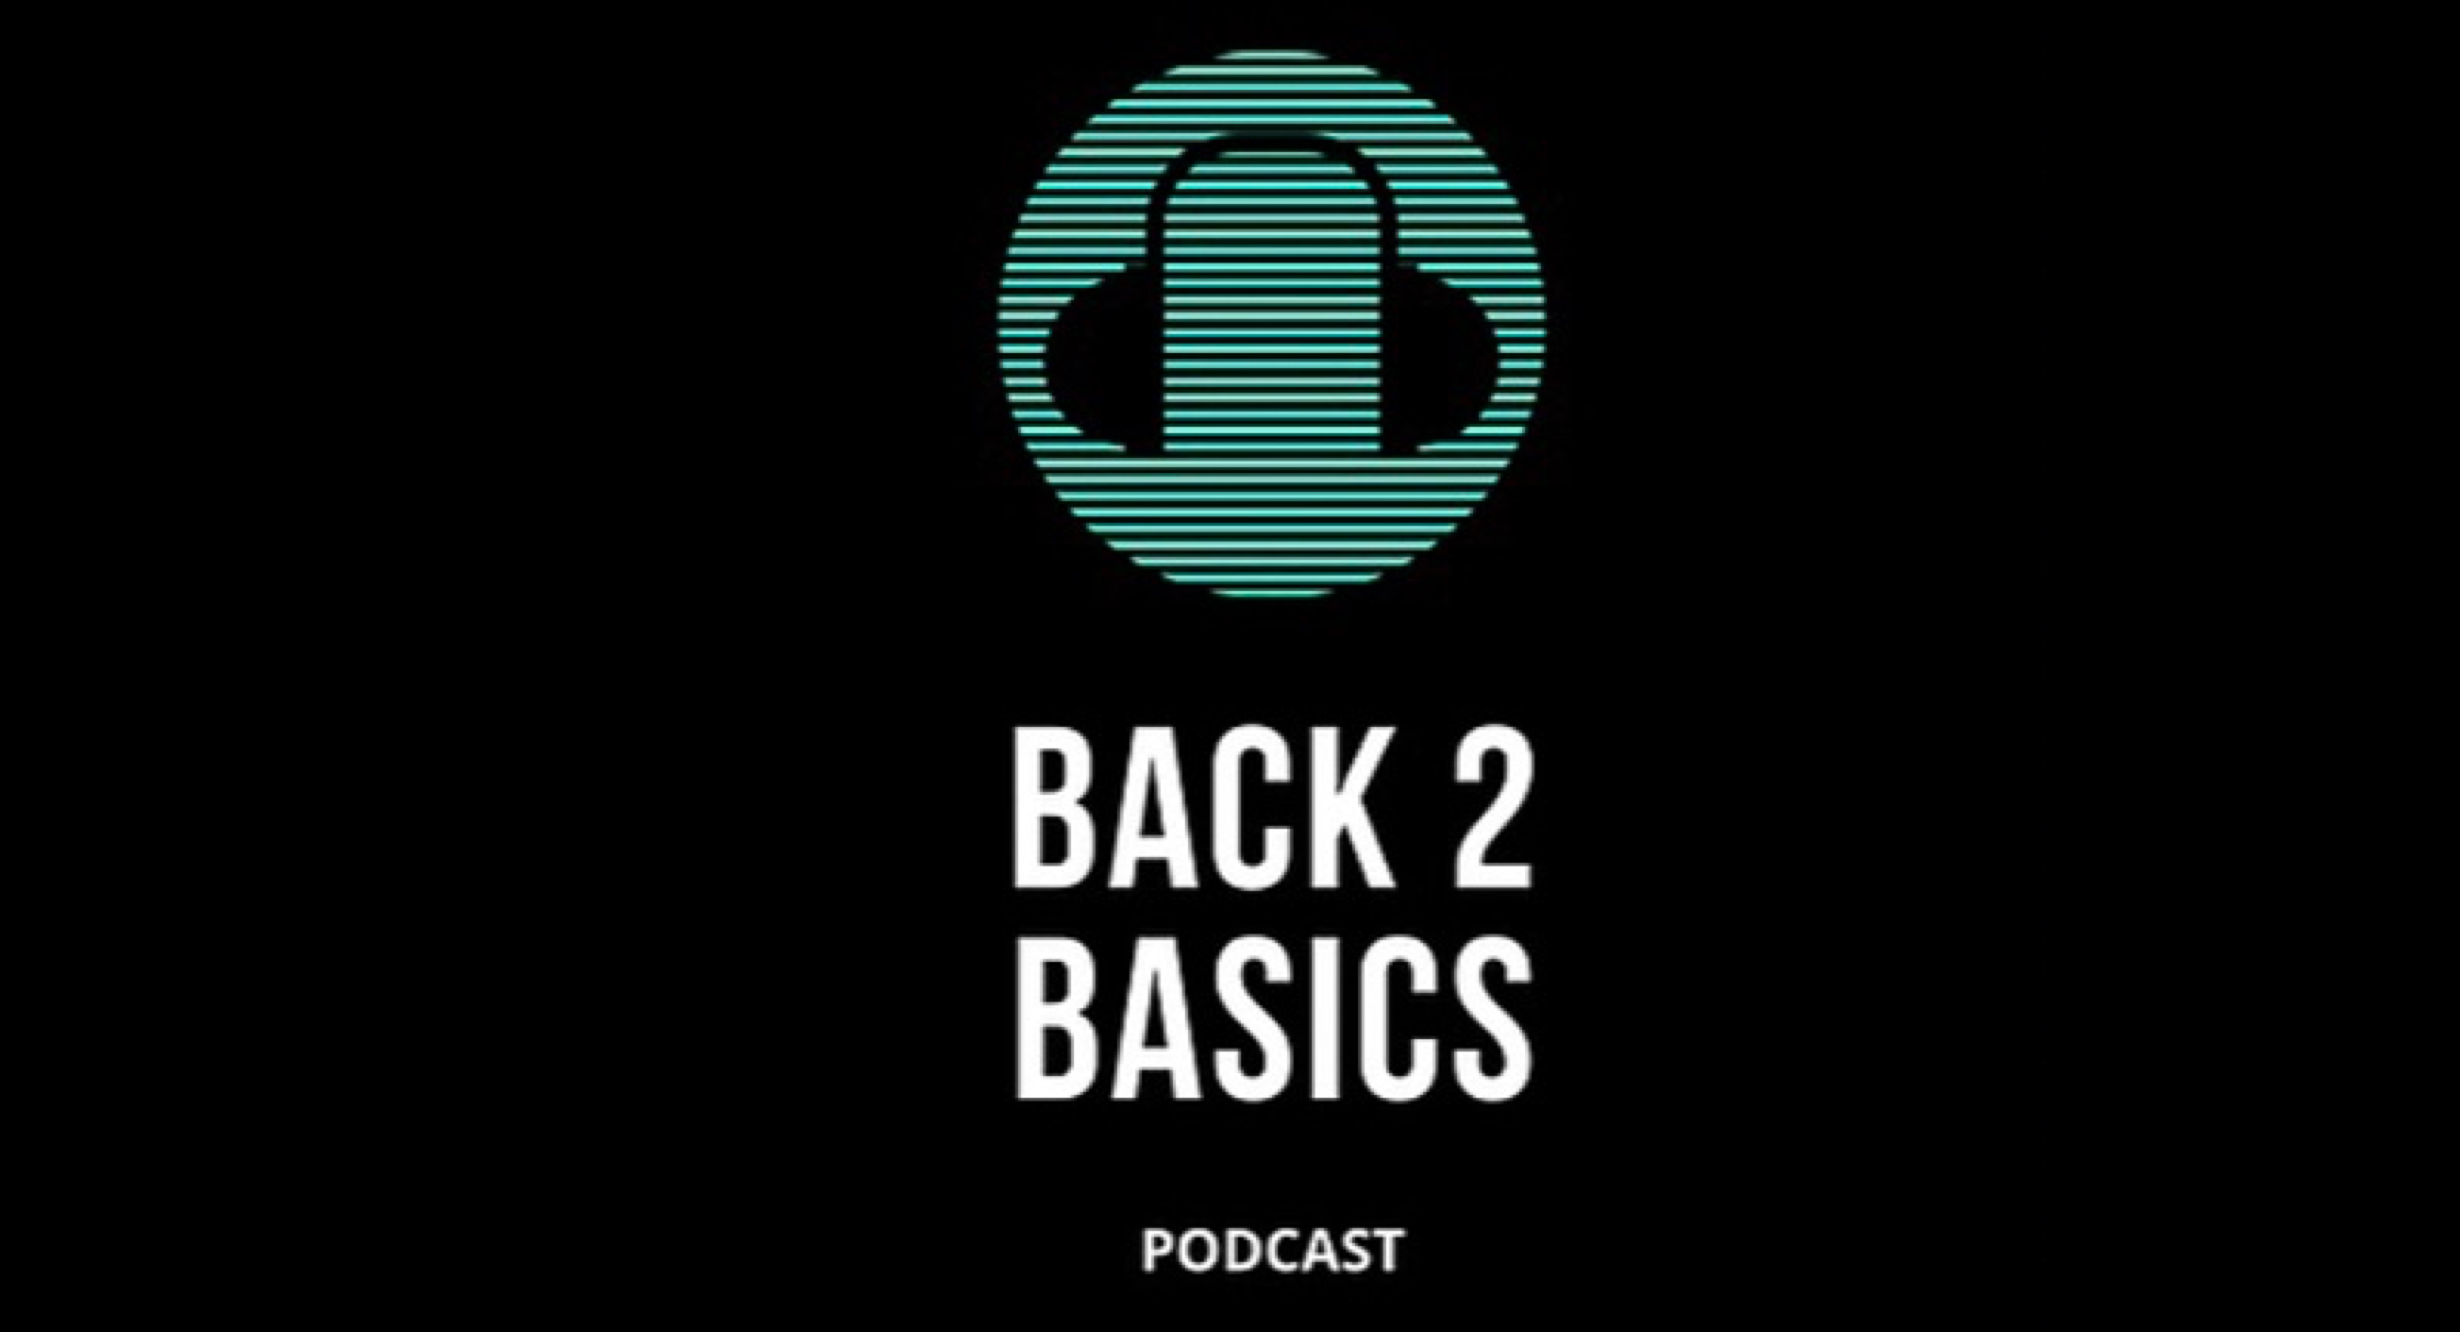 Back 2 Basics Podcast